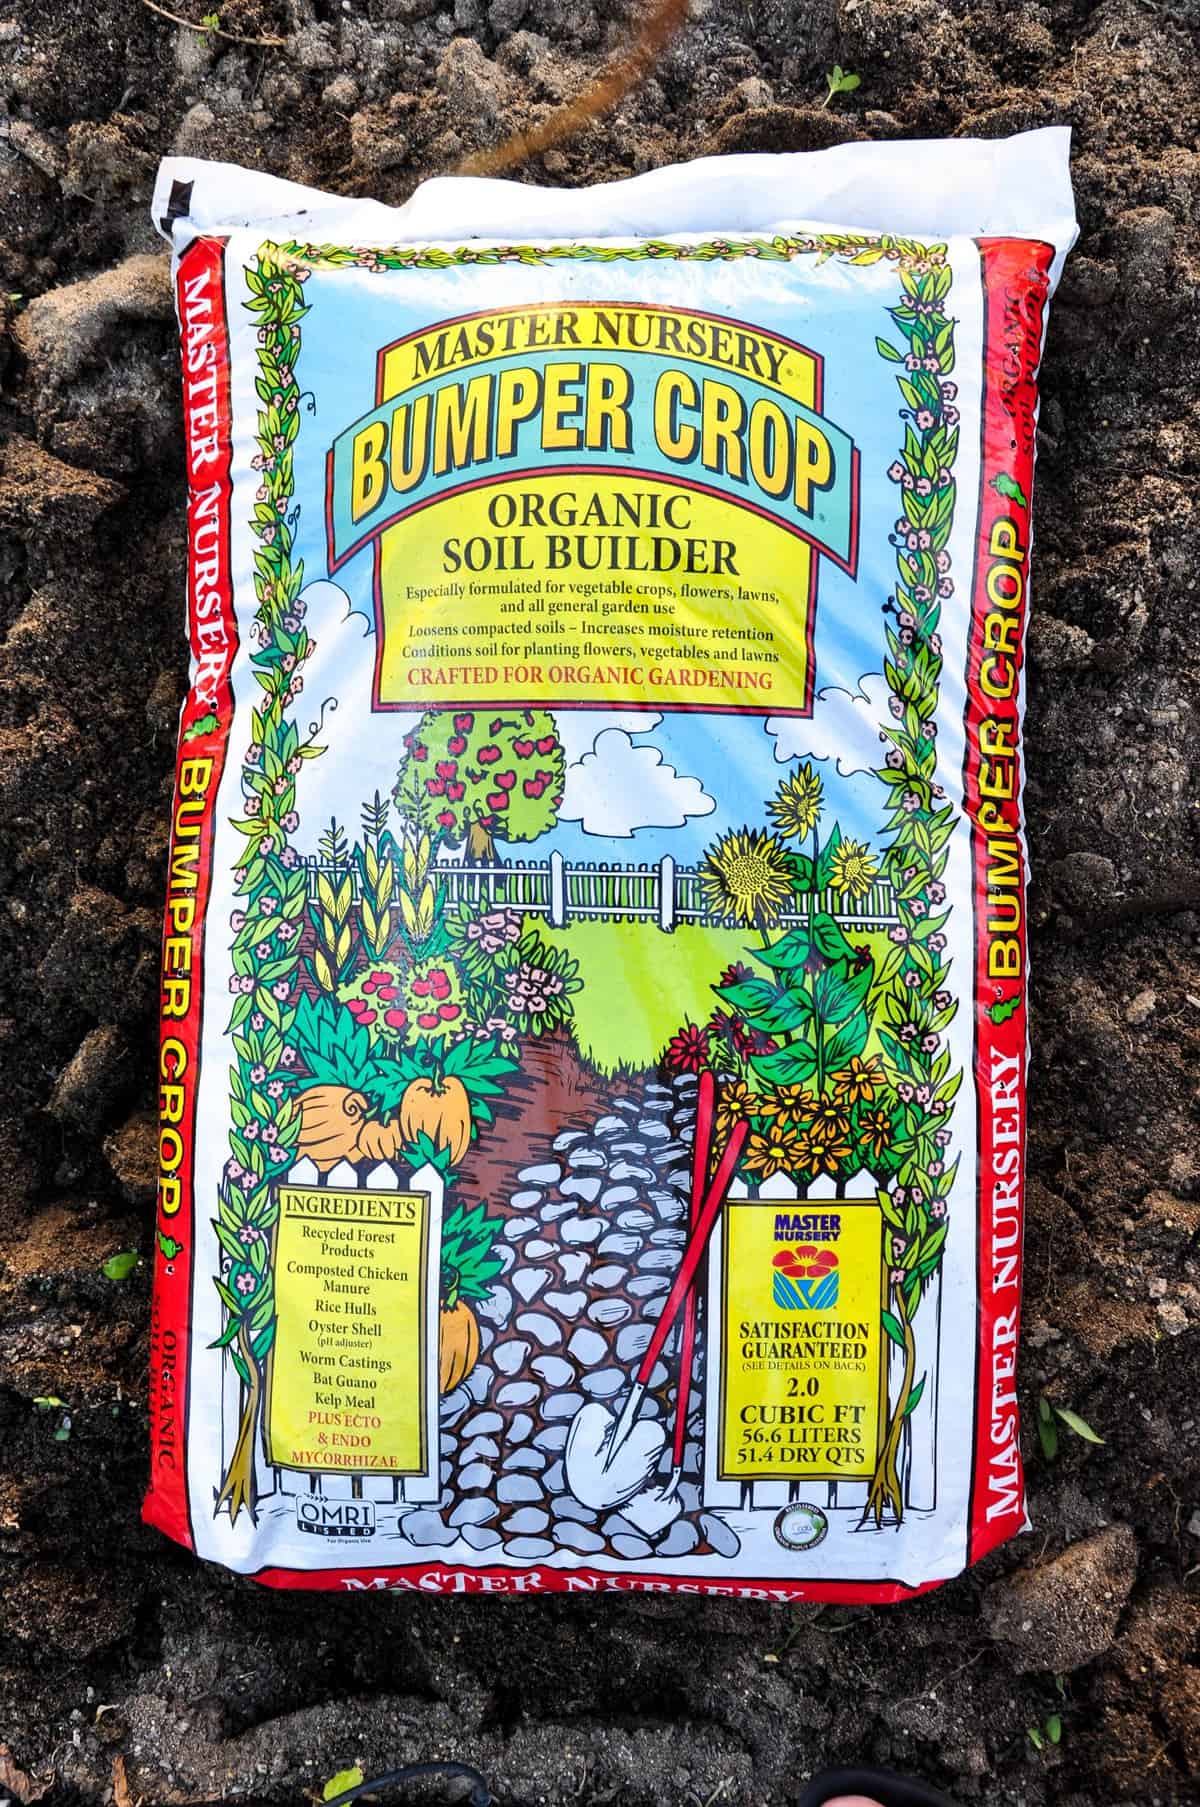 Maser Nursery Bumper Crop Soil